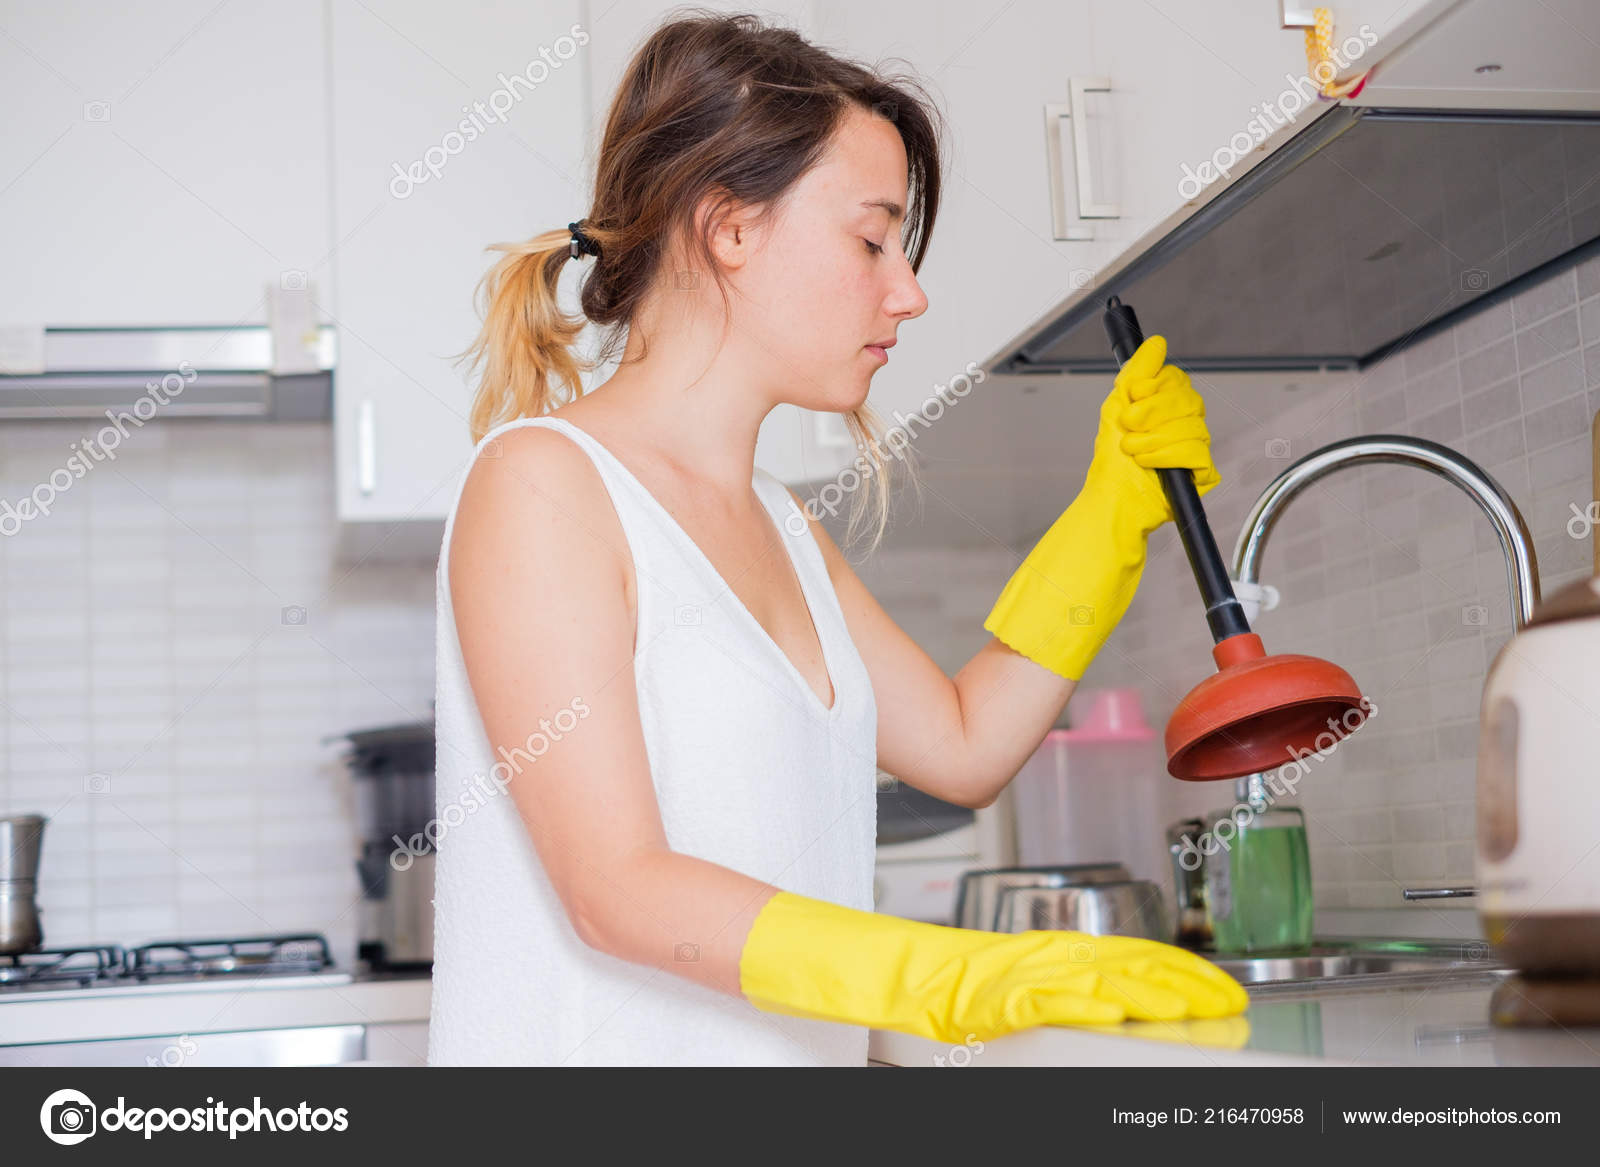 upset woman using plunger in blocked kitchen sink, Stock image